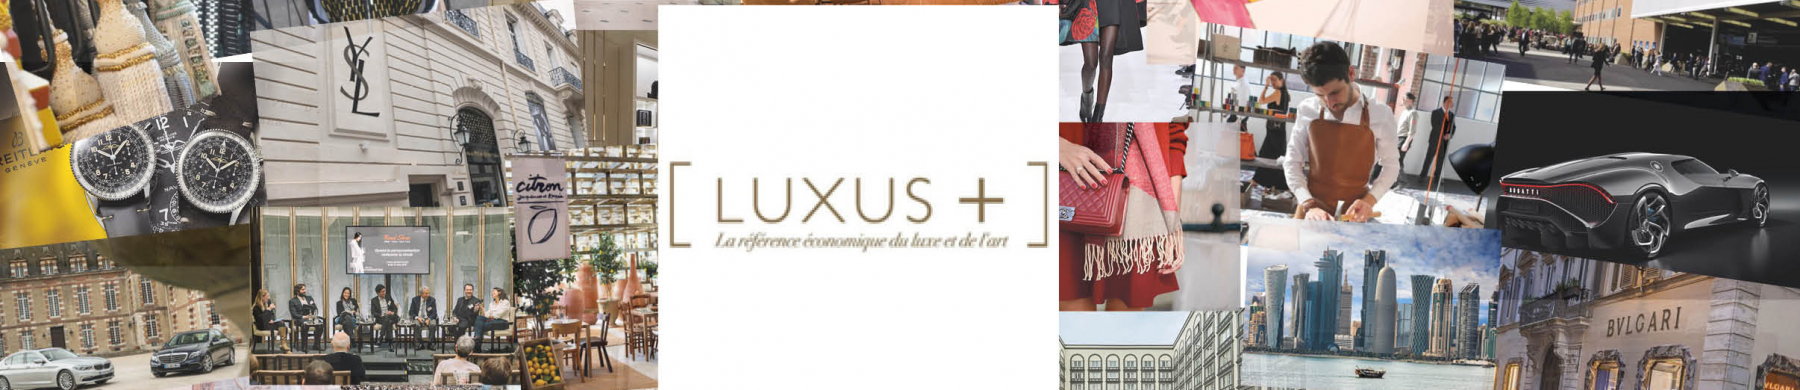 LUXUS Plus banner